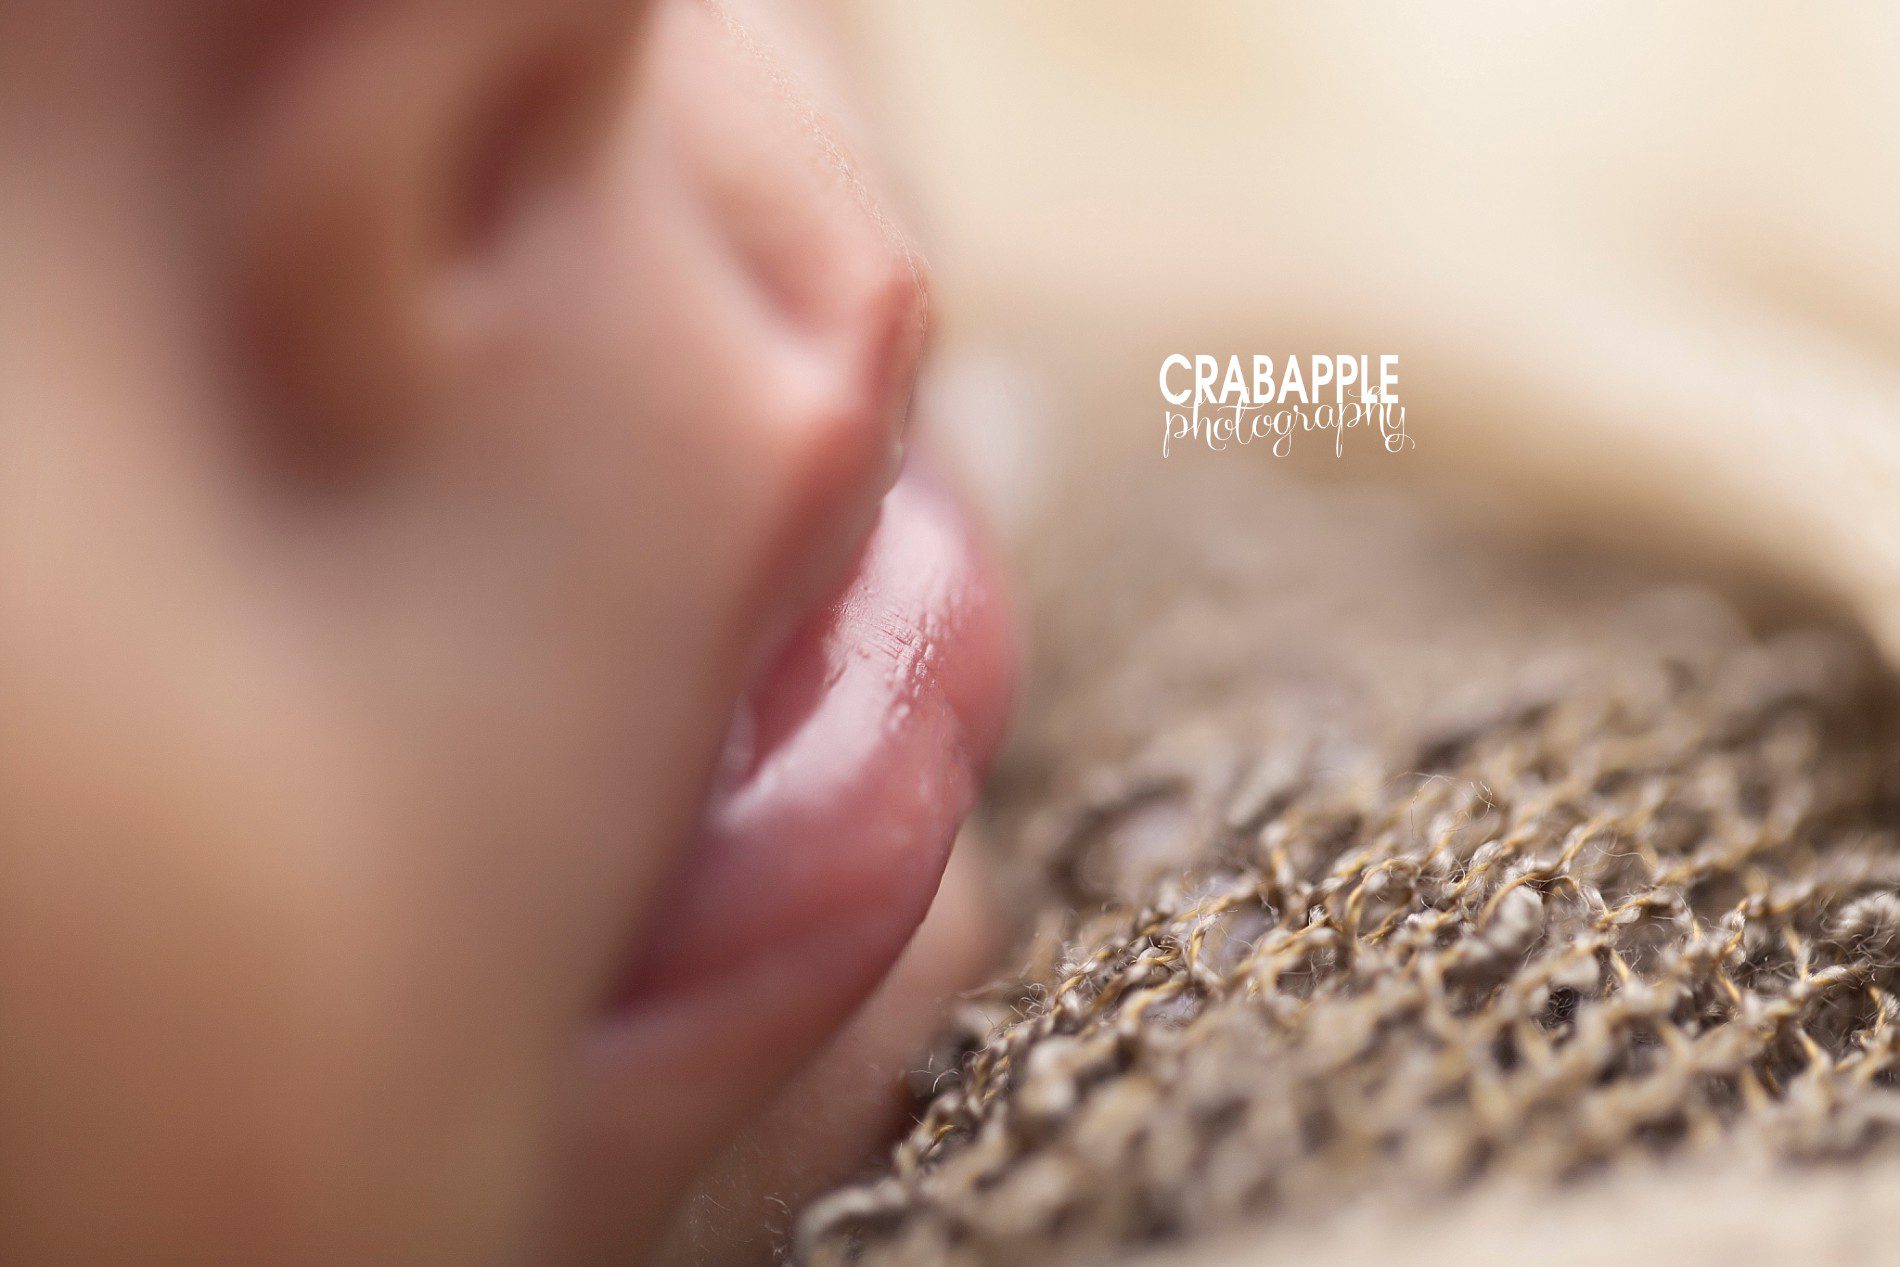 macrophotography close up detail portraits newborn lips